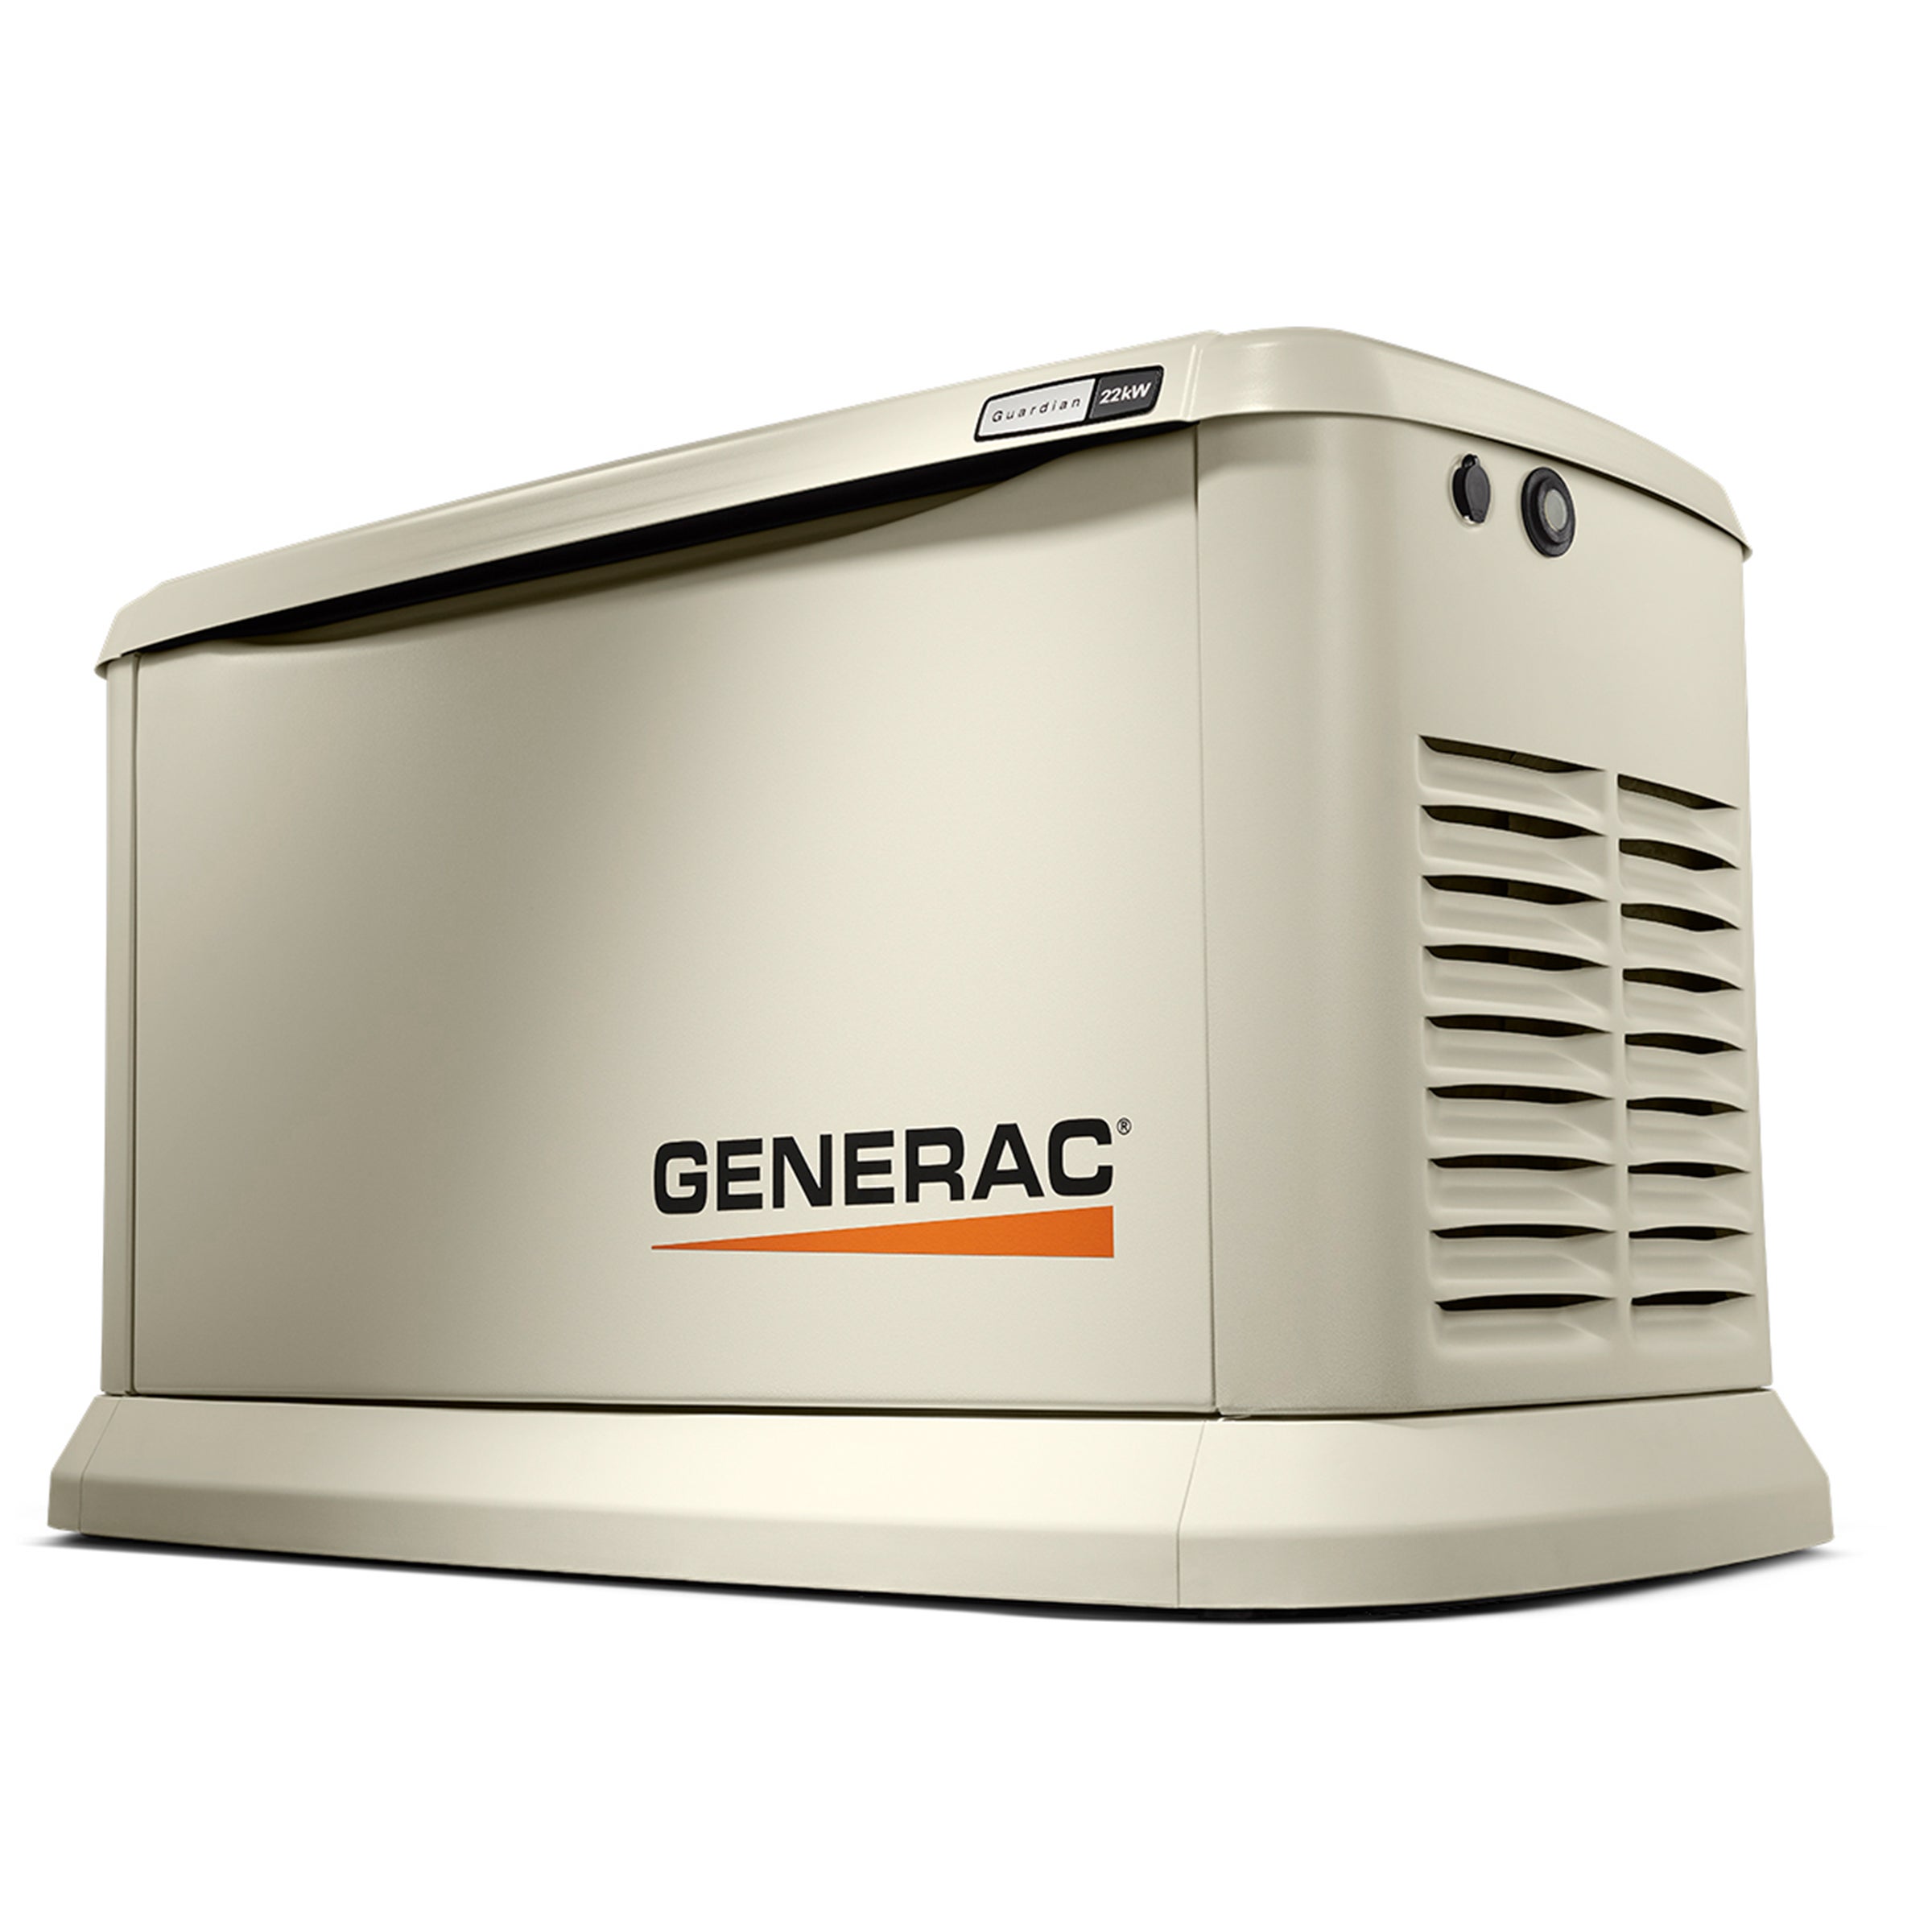 generator